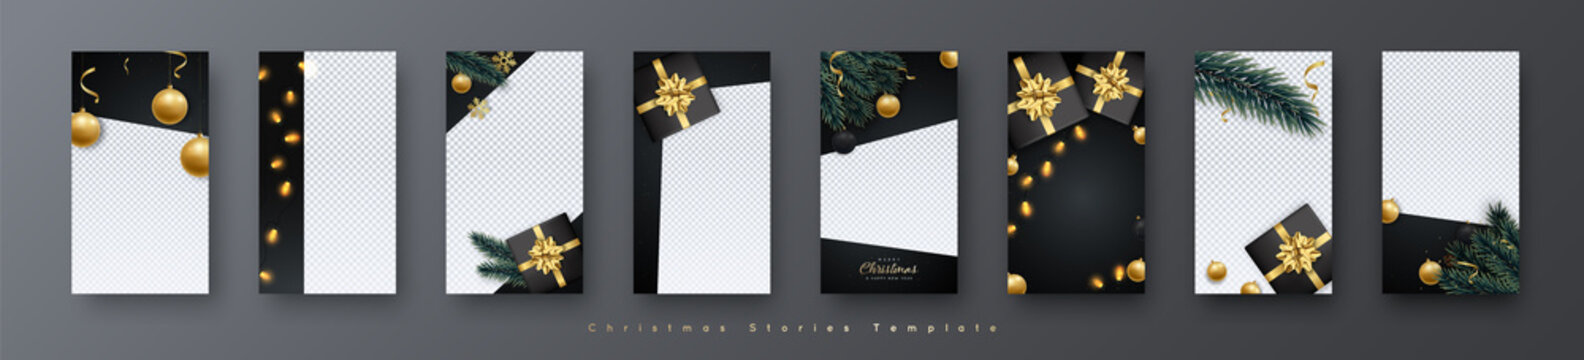 Trendy Instagram Stories template. Set of 8 Christmas pattern. Design template for social networks, instastories, vertical banner.